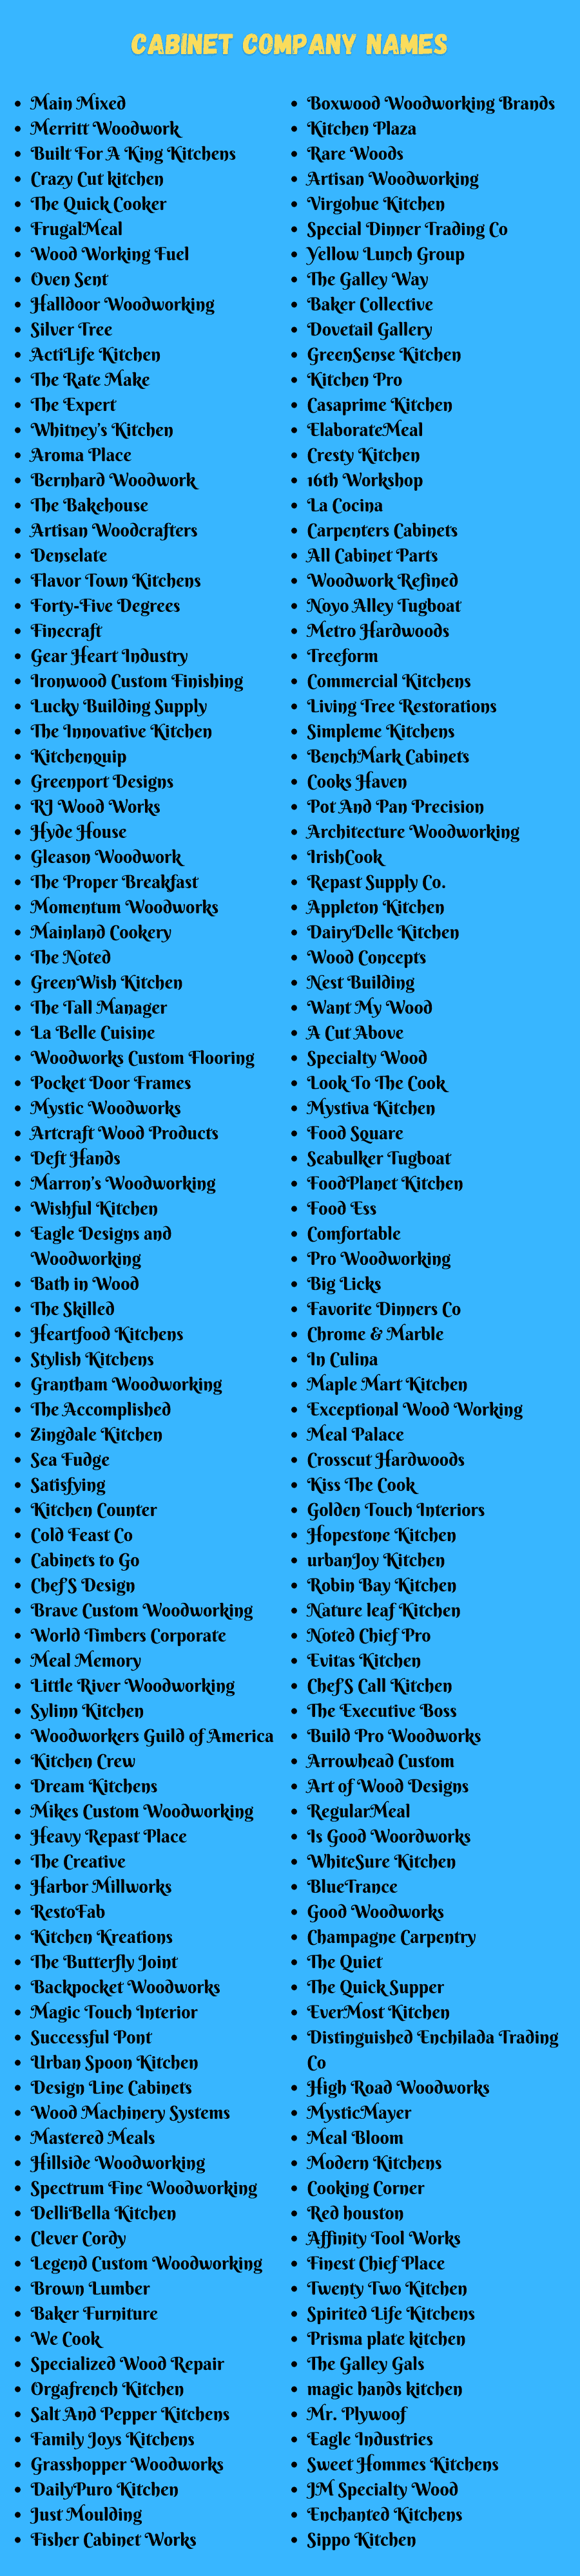 Cabinet Company Names